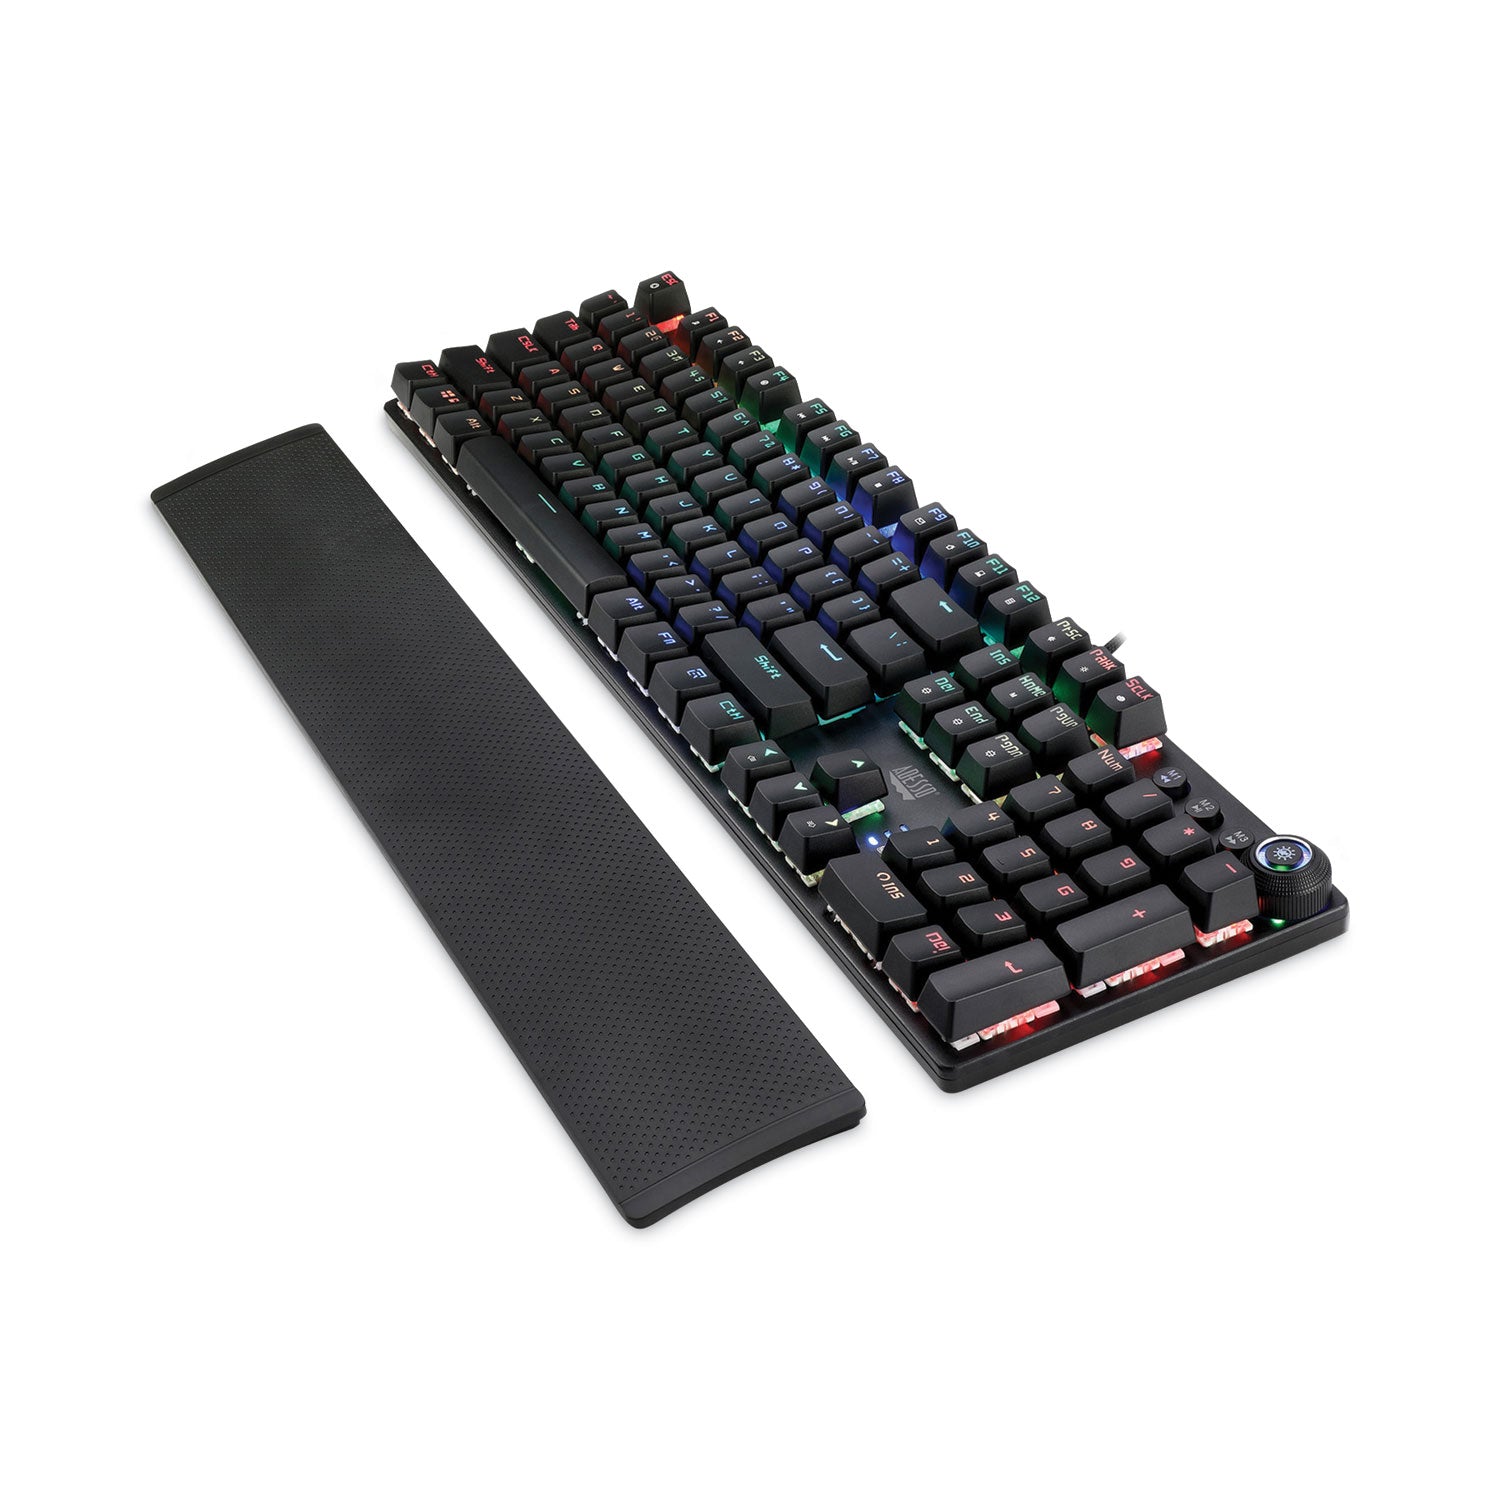 rgb-programmable-mechanical-gaming-keyboard-with-detachable-magnetic-palmrest-108-keys-black_adeakb650eb - 2